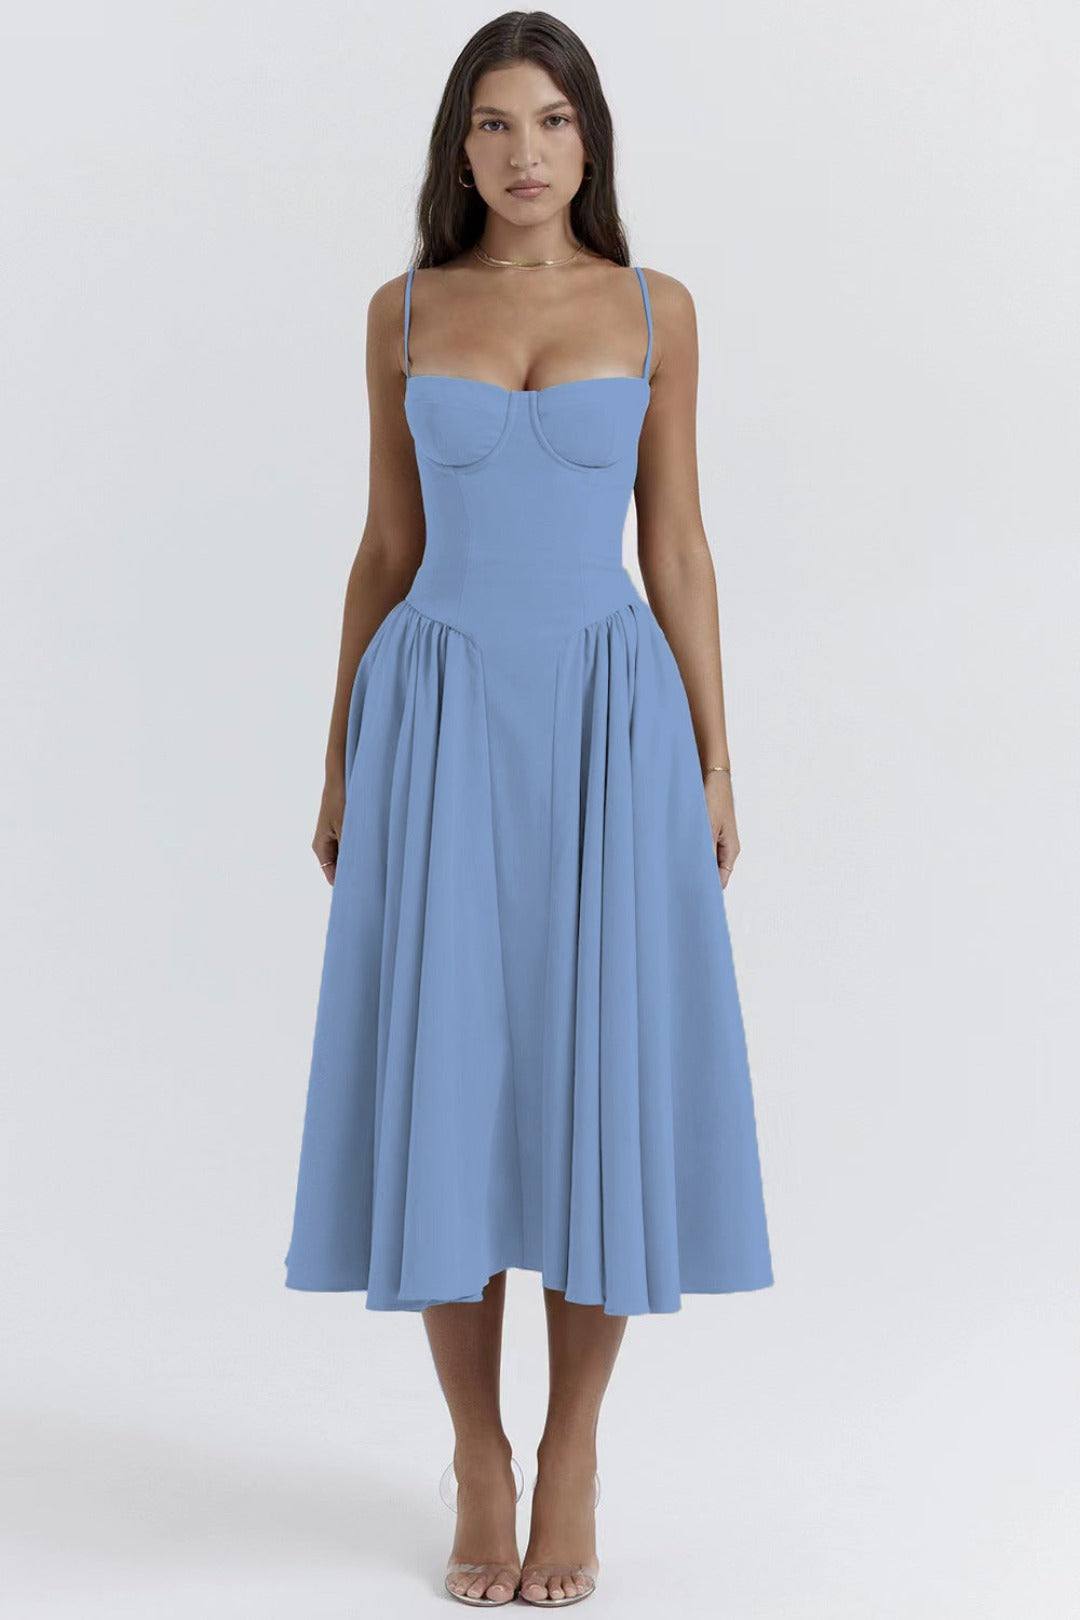 The Spring Dress - Light blue